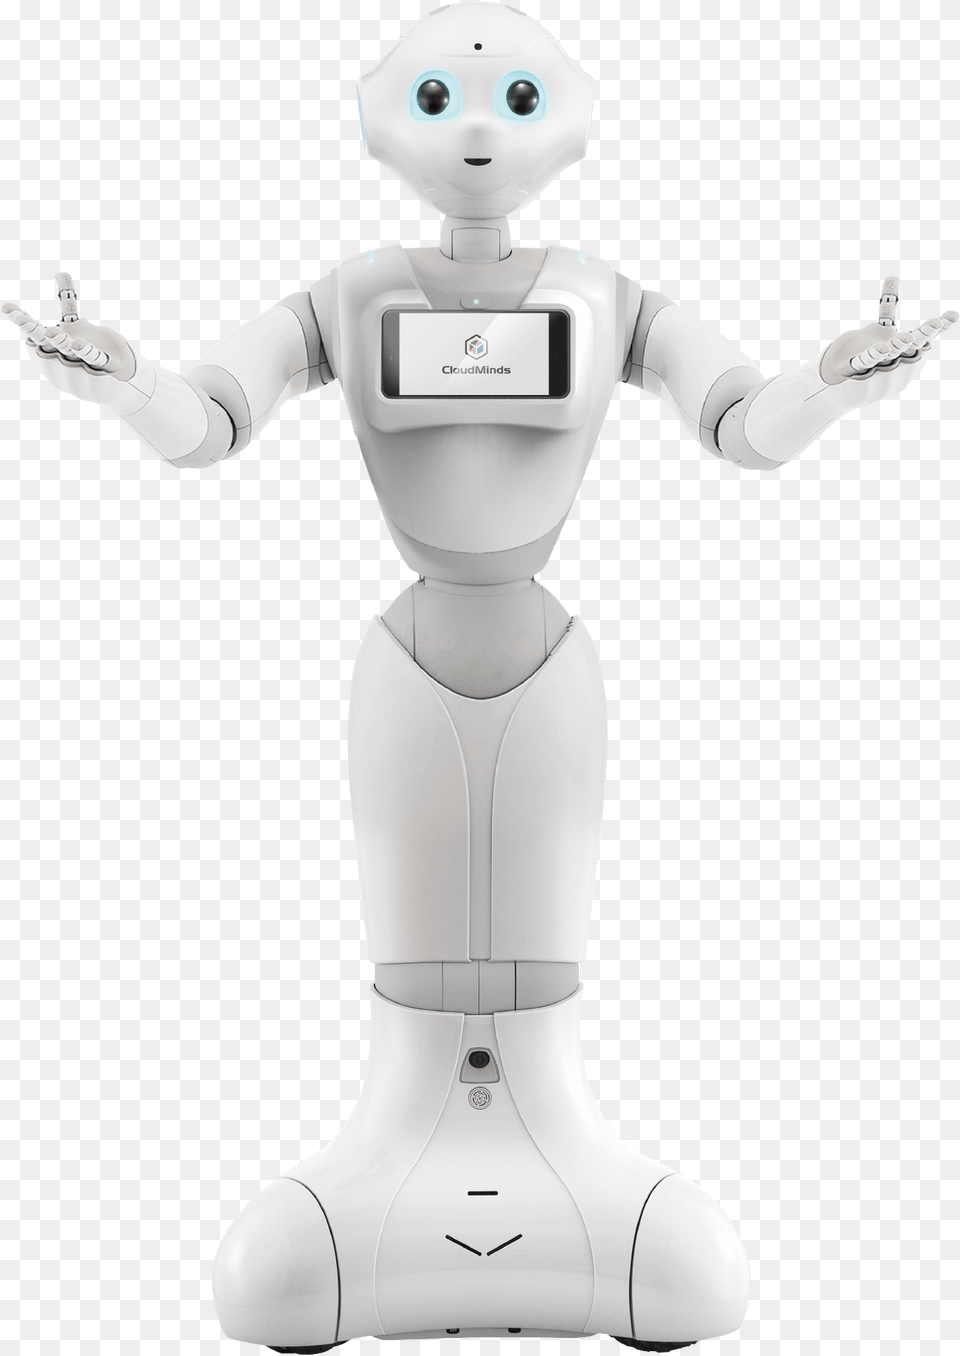 Cloud Pepper Humanoid Robot Cloudminds Robots Cloud Pepper, Baby, Person, Head, Face Png Image